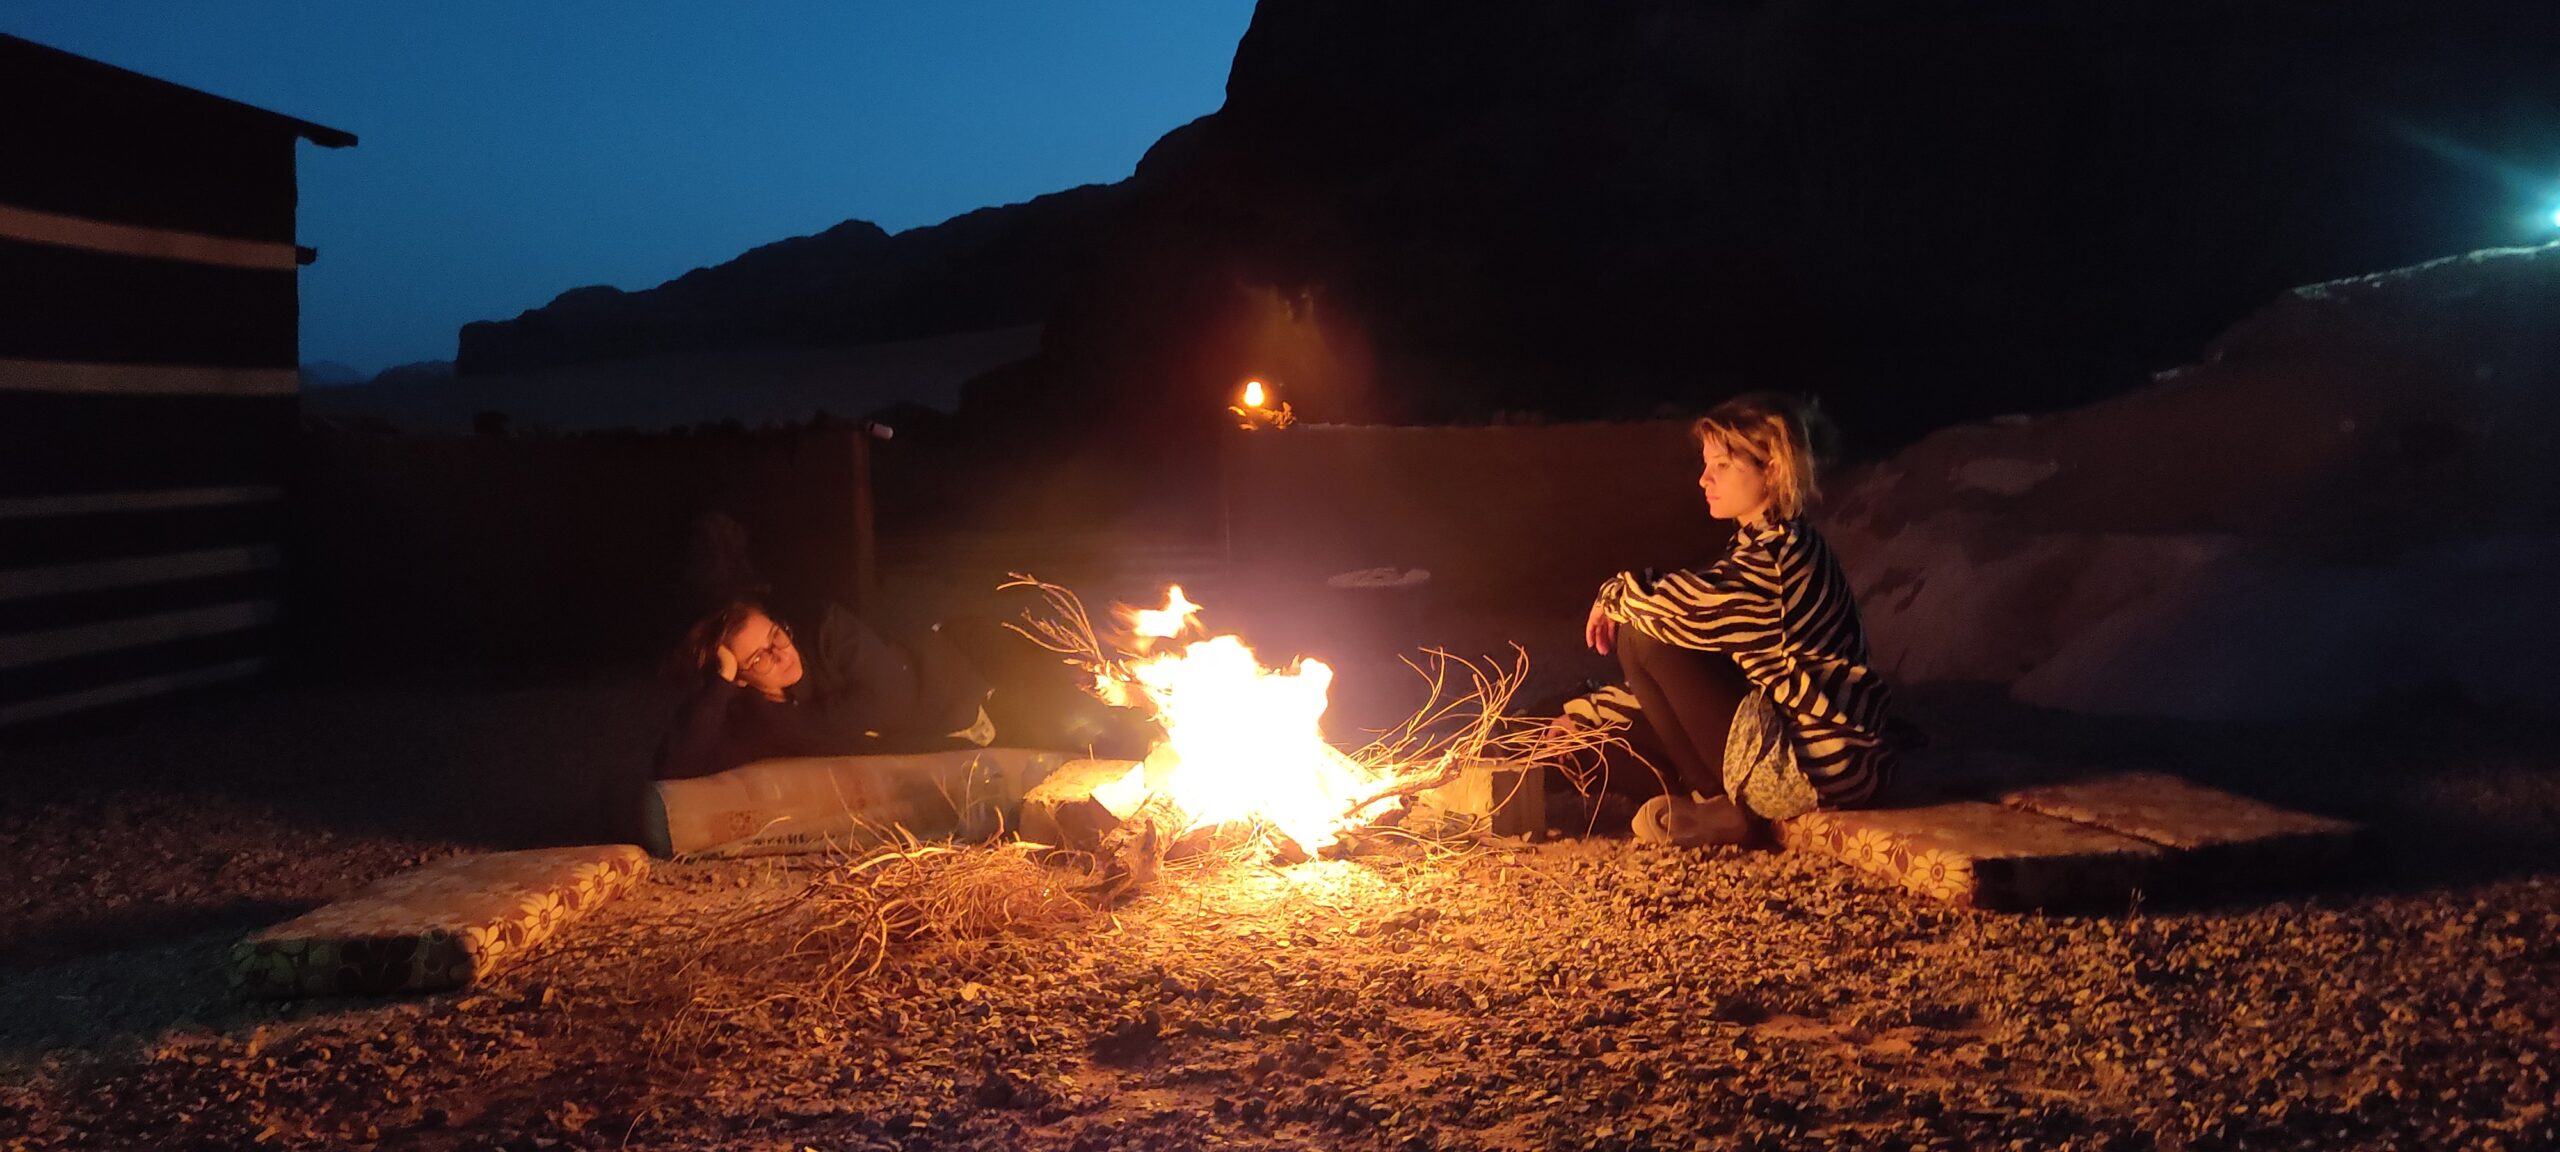 fire night relax camp wadirumhappy